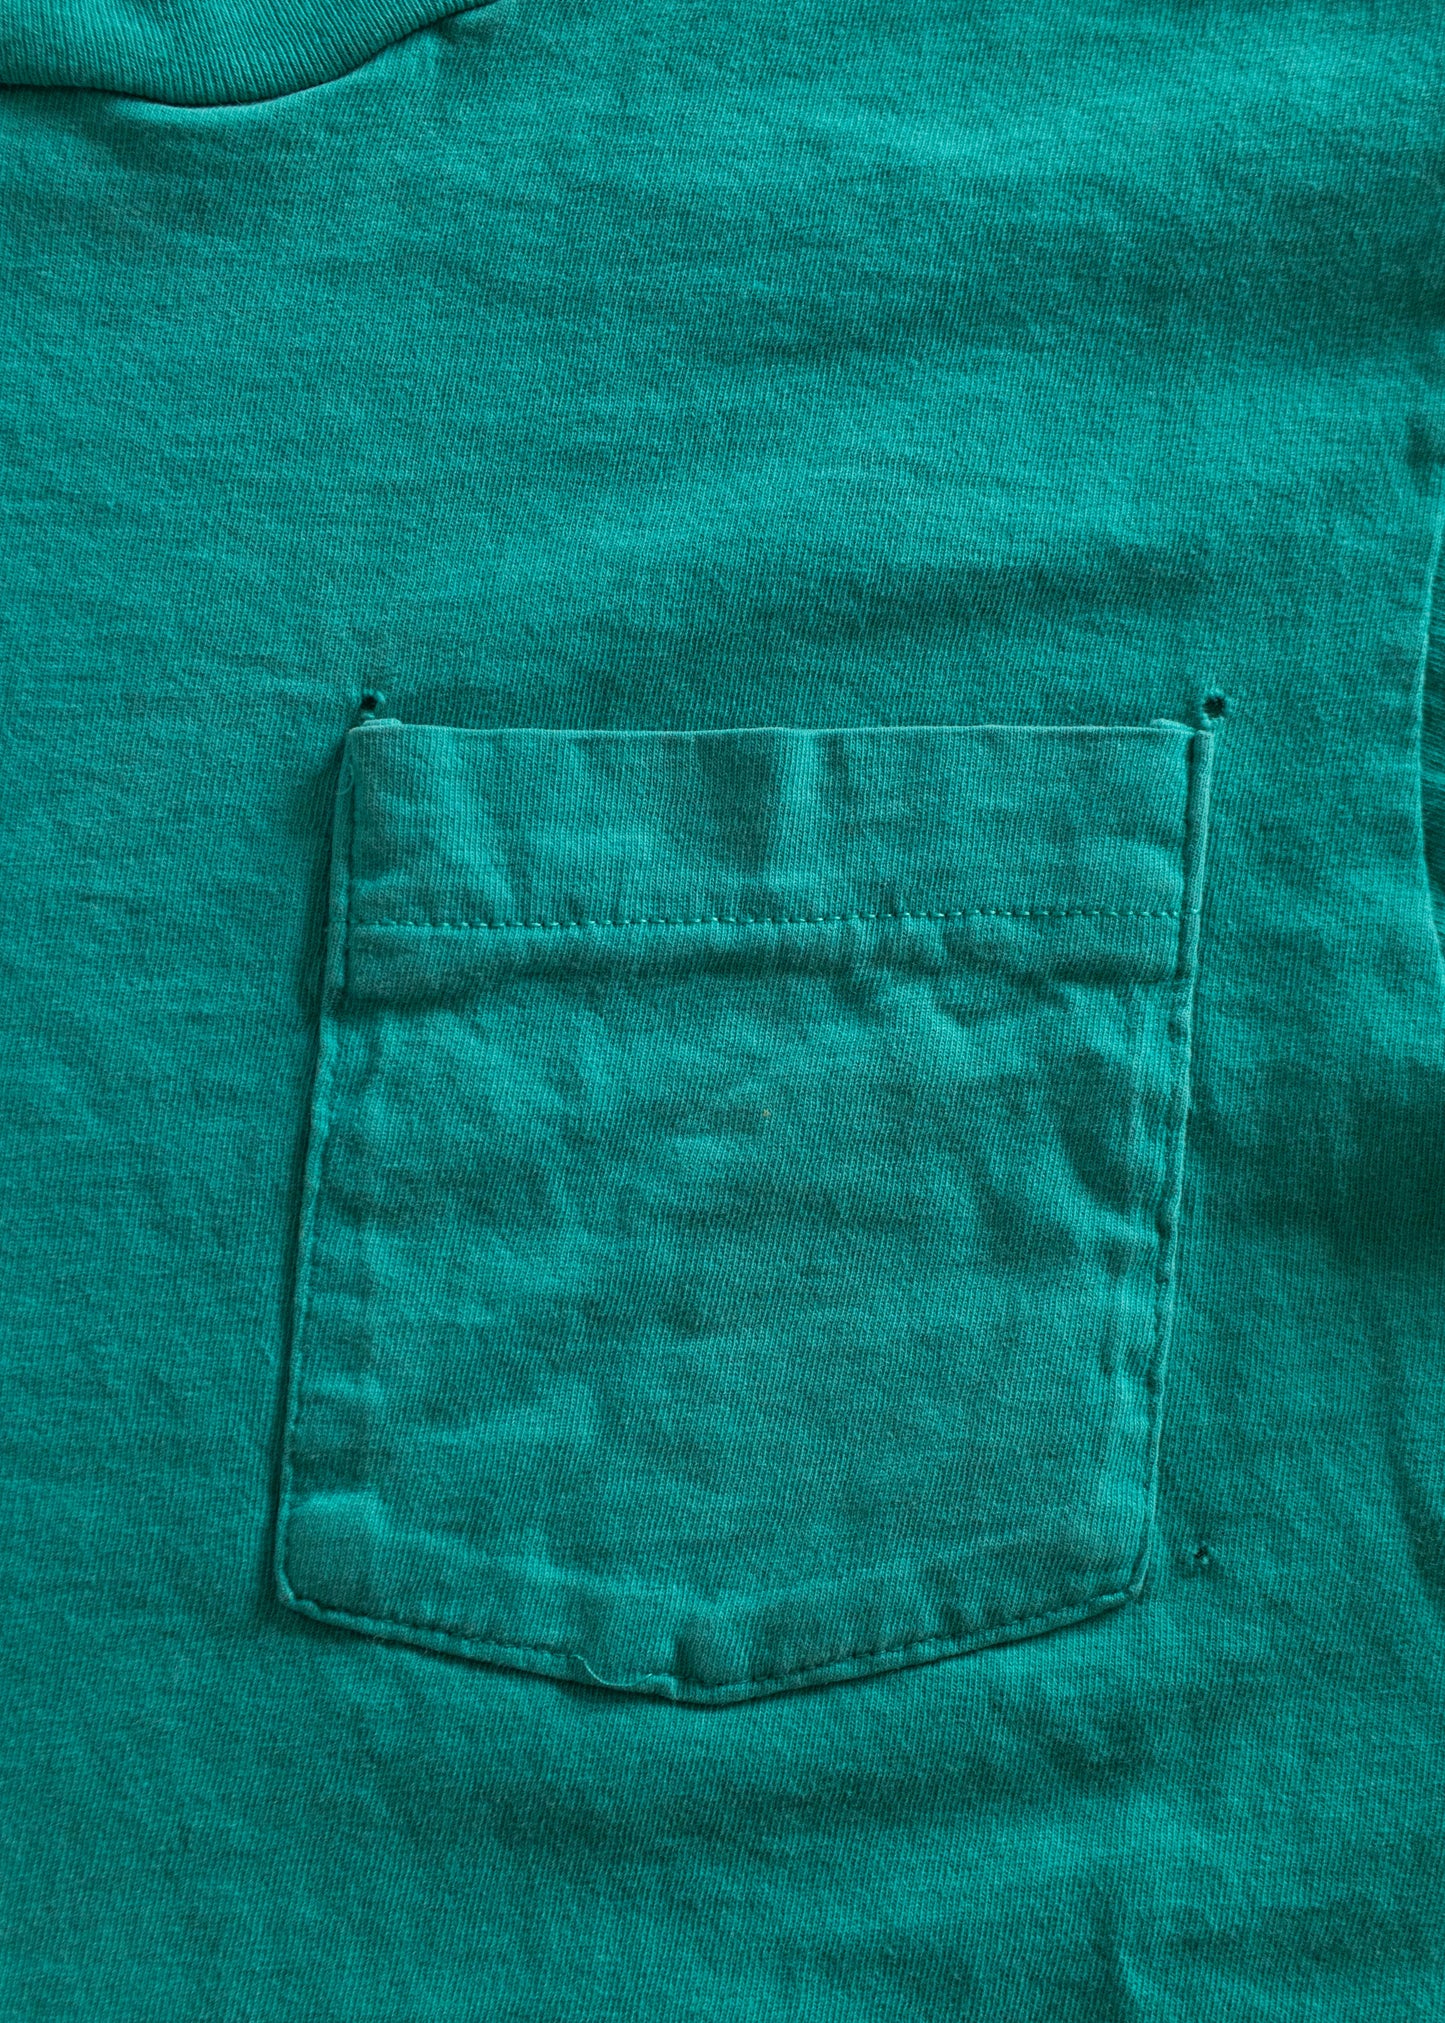 Vintage 1980s Selvedge Pocket T-Shirt Size S/M